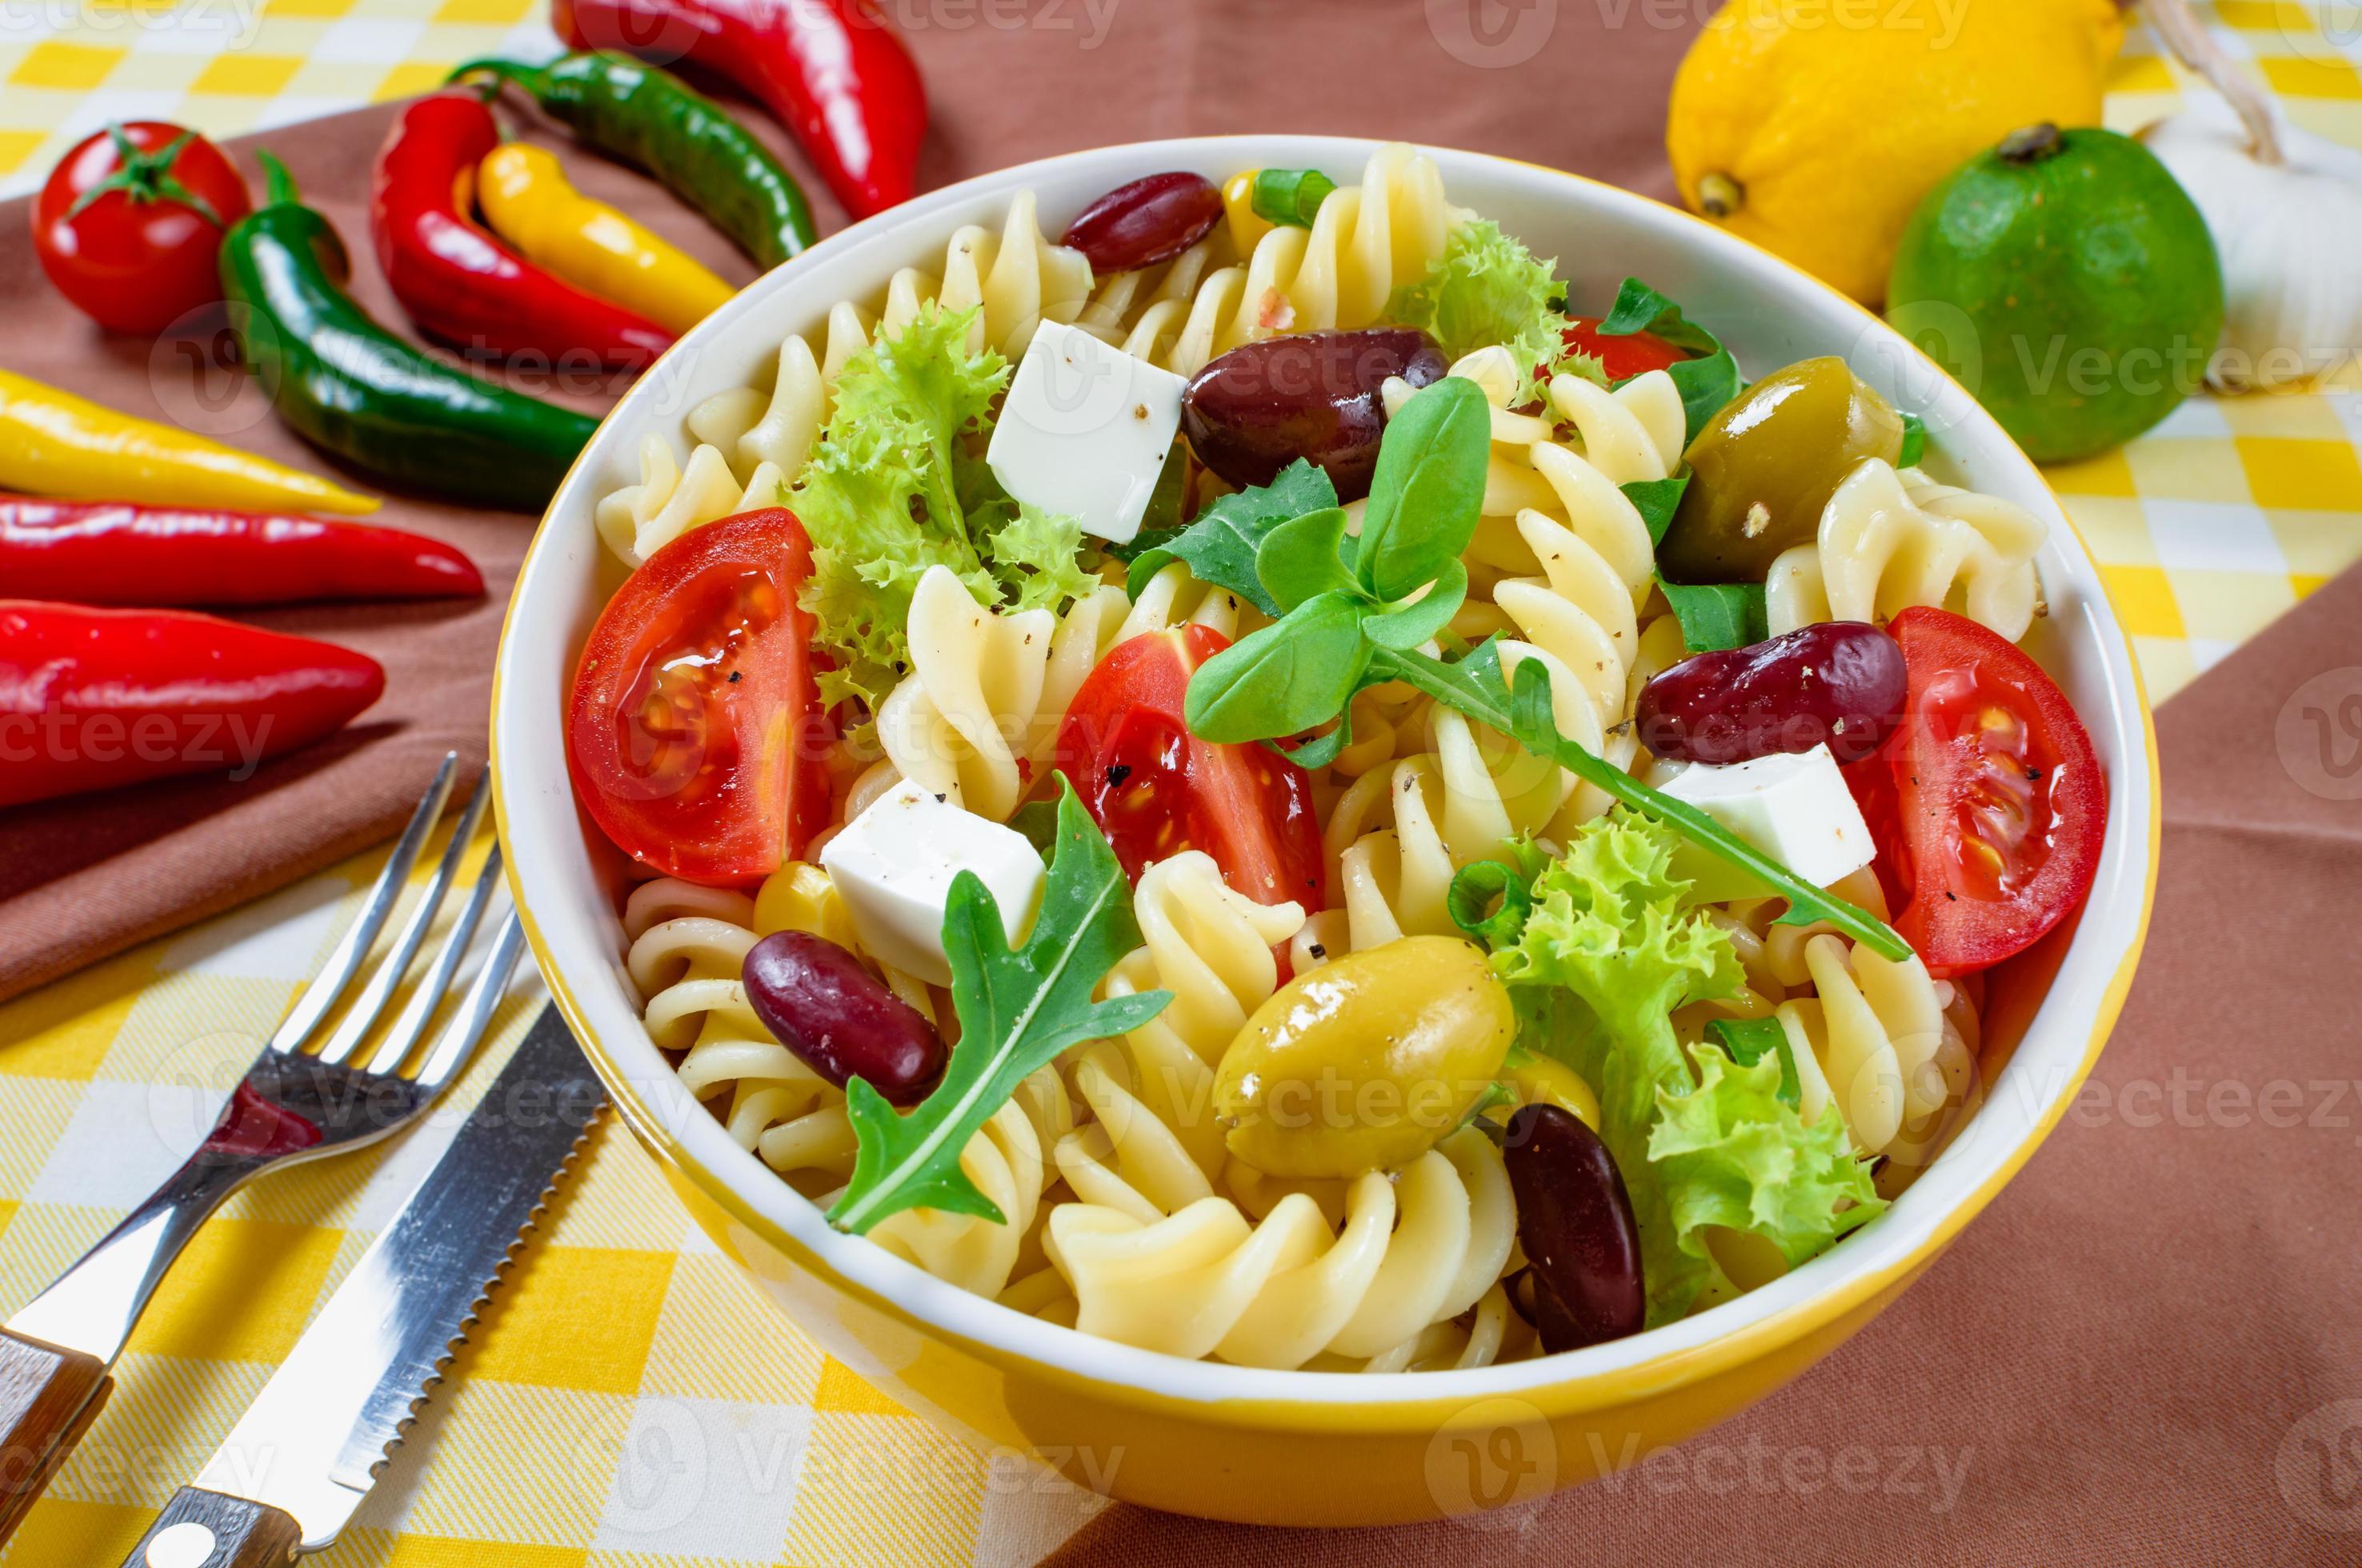 pastasalade met tomaat, rucola, komkommer, paprika, hete pepers, zwarte en groene olijven en kaas-feta. bovenaanzicht. foto